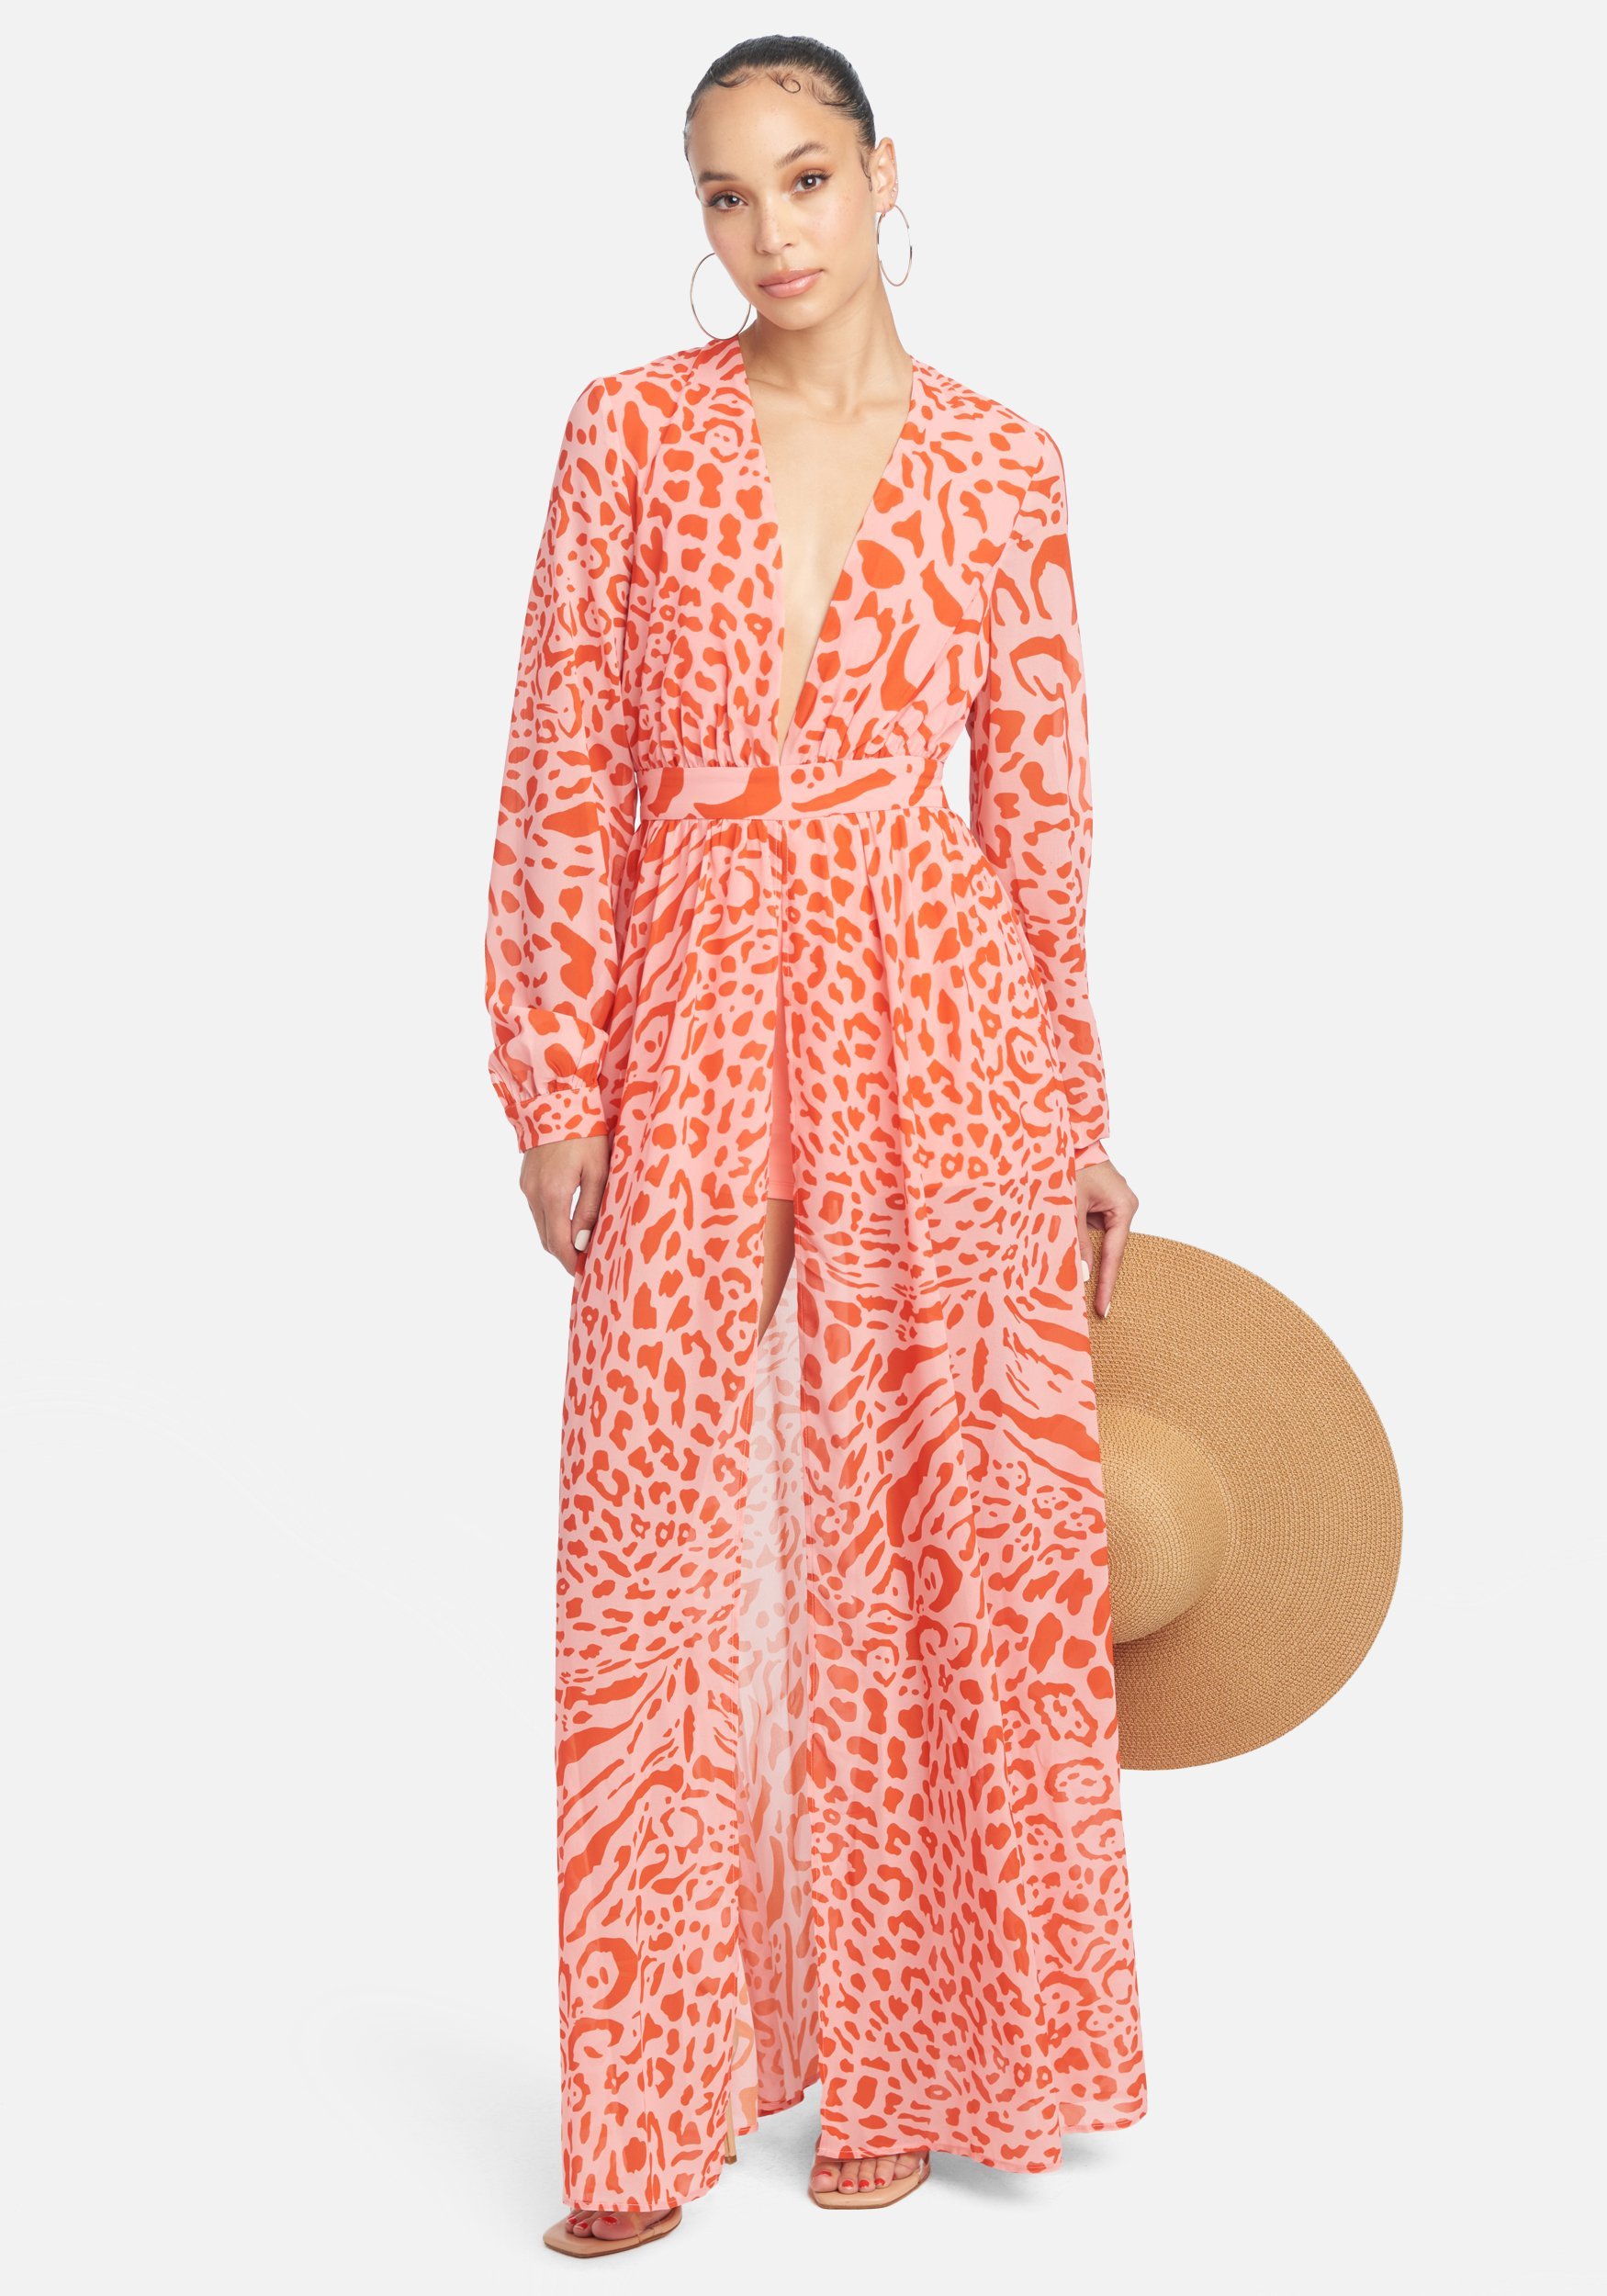 Bebe Women's Printed Deep V Maxi Dress, Size Medium in Tiger Leopard Print Polyester/Viscose